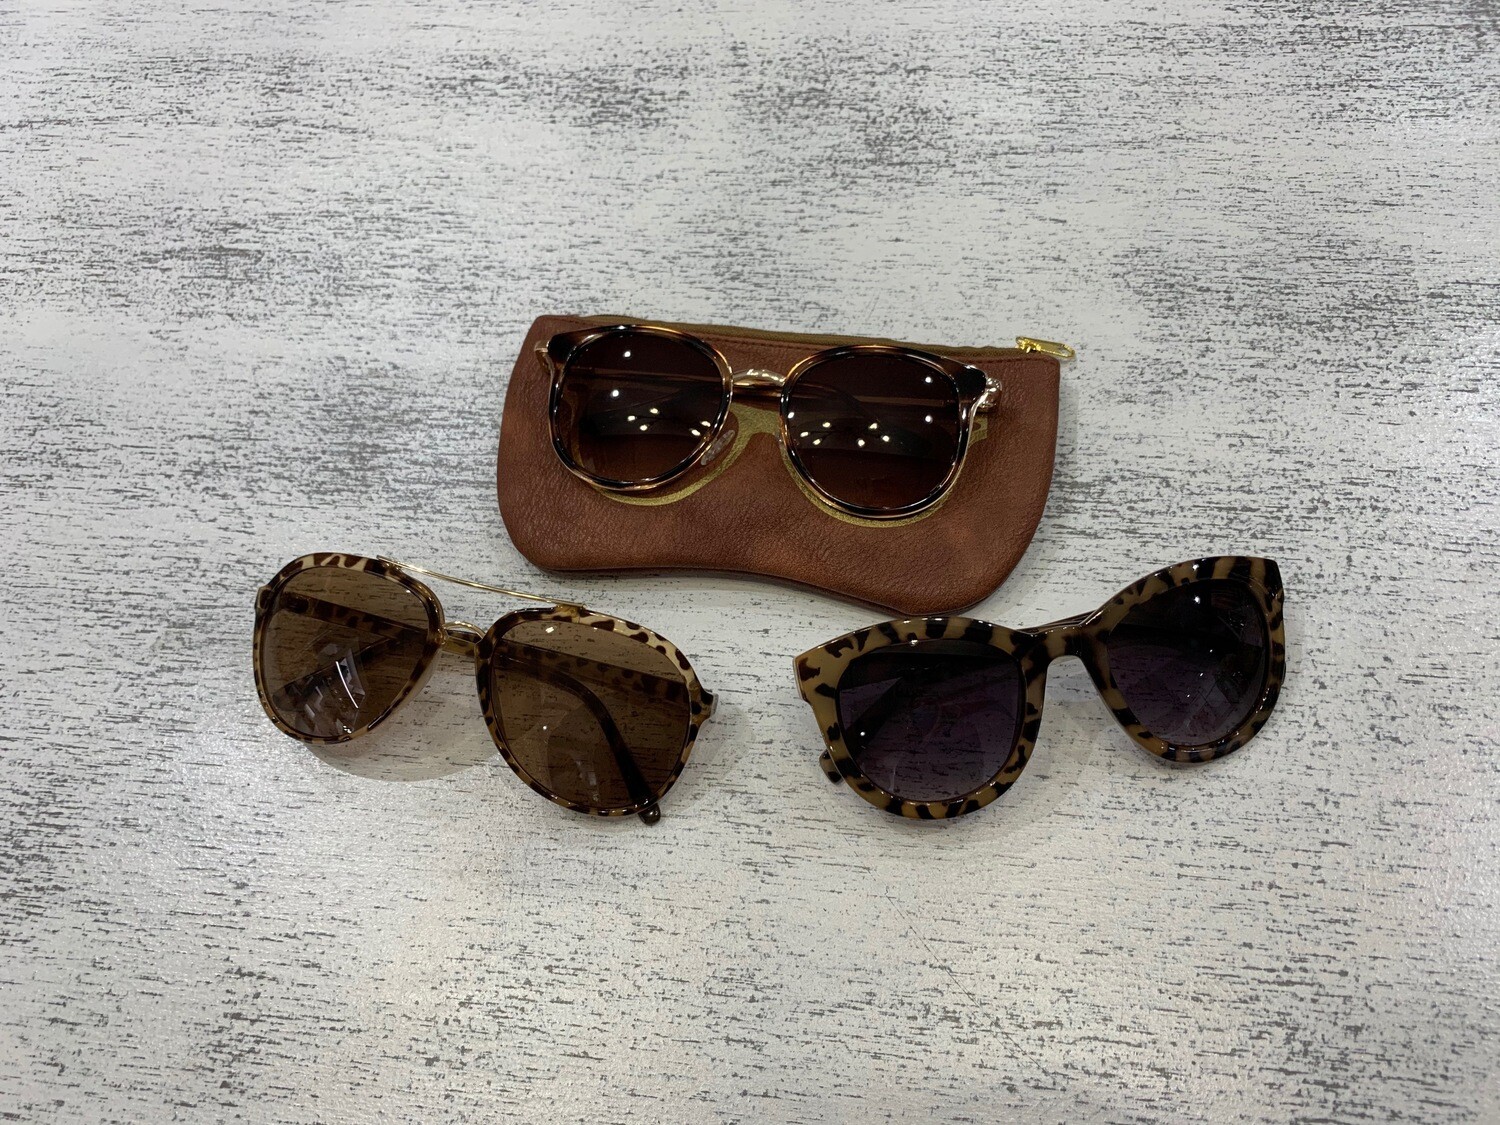 Tortoise Wayfarer Sunglasses